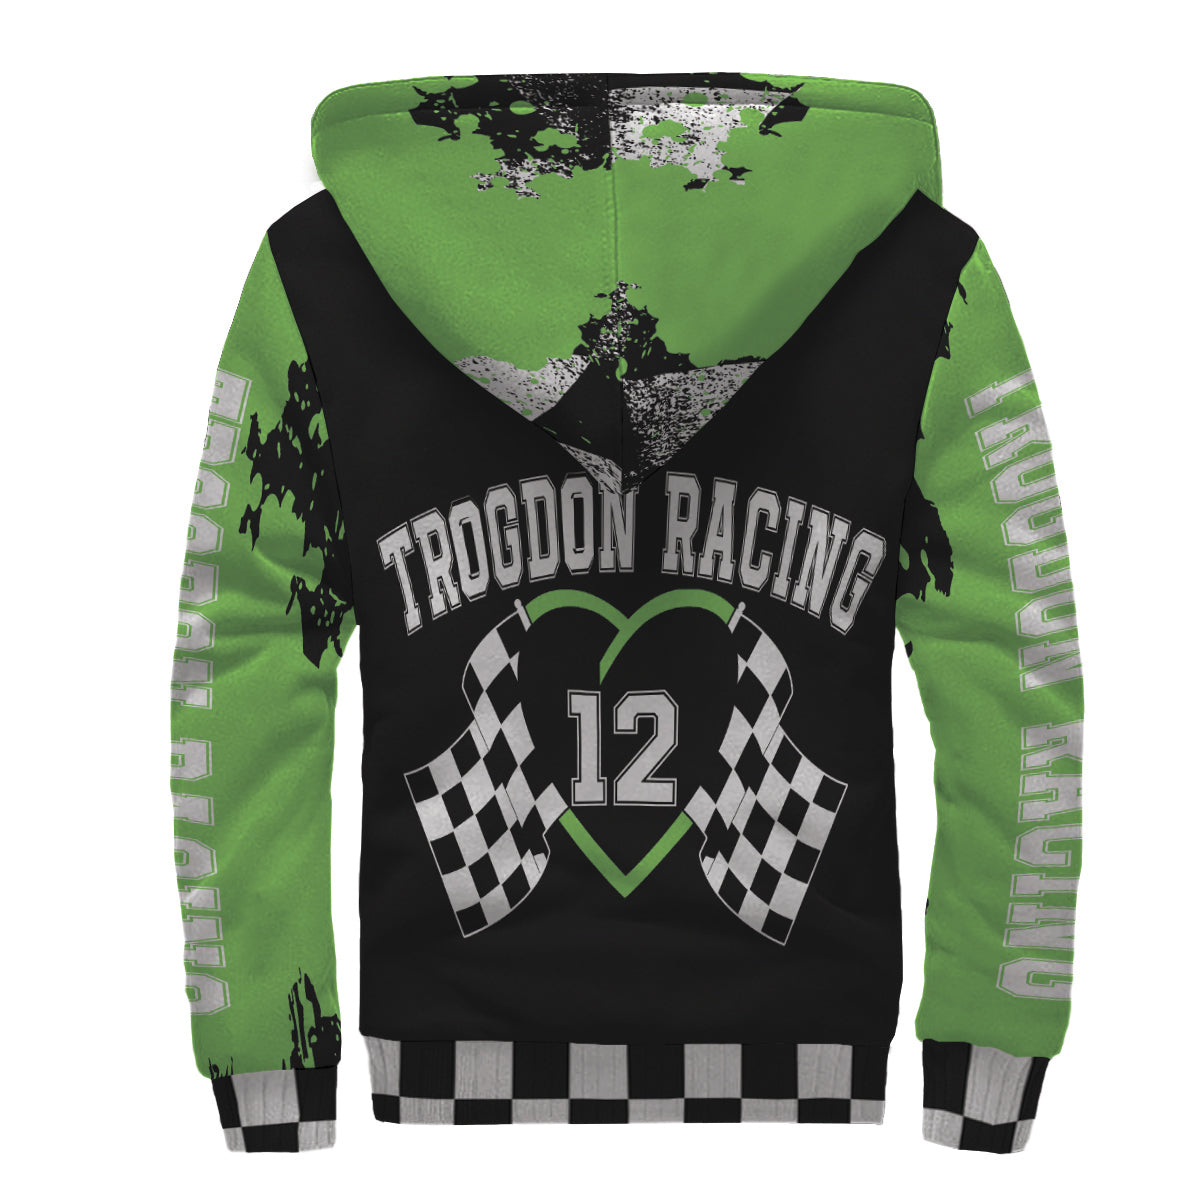 Trogdon Racing Sherpa Jacket 